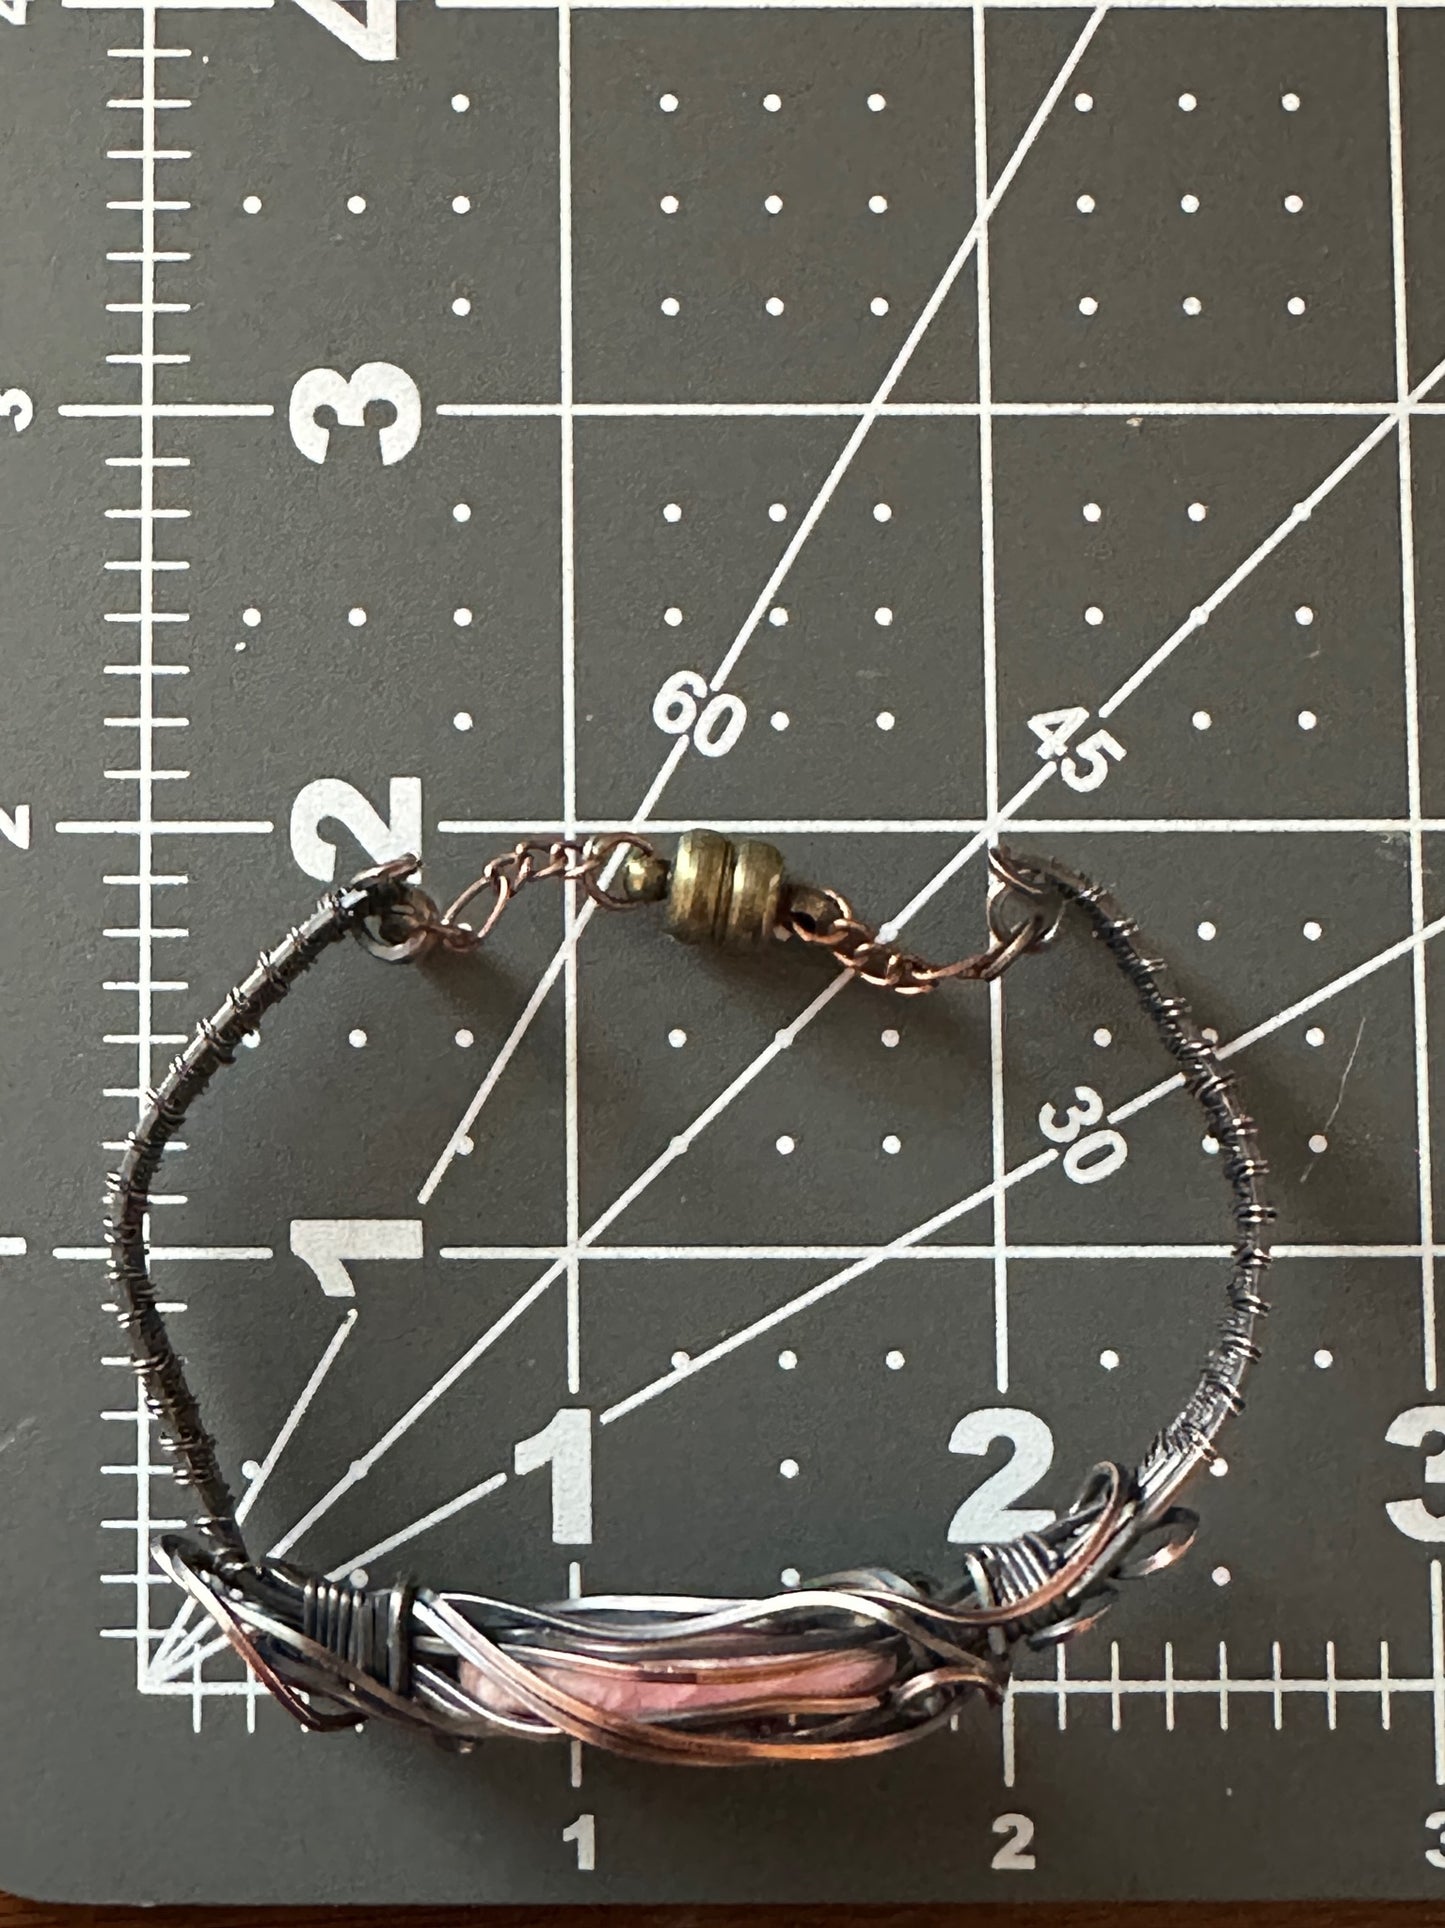 Oval Rhodochrosite Wire Wrapped Cuff Bracelet